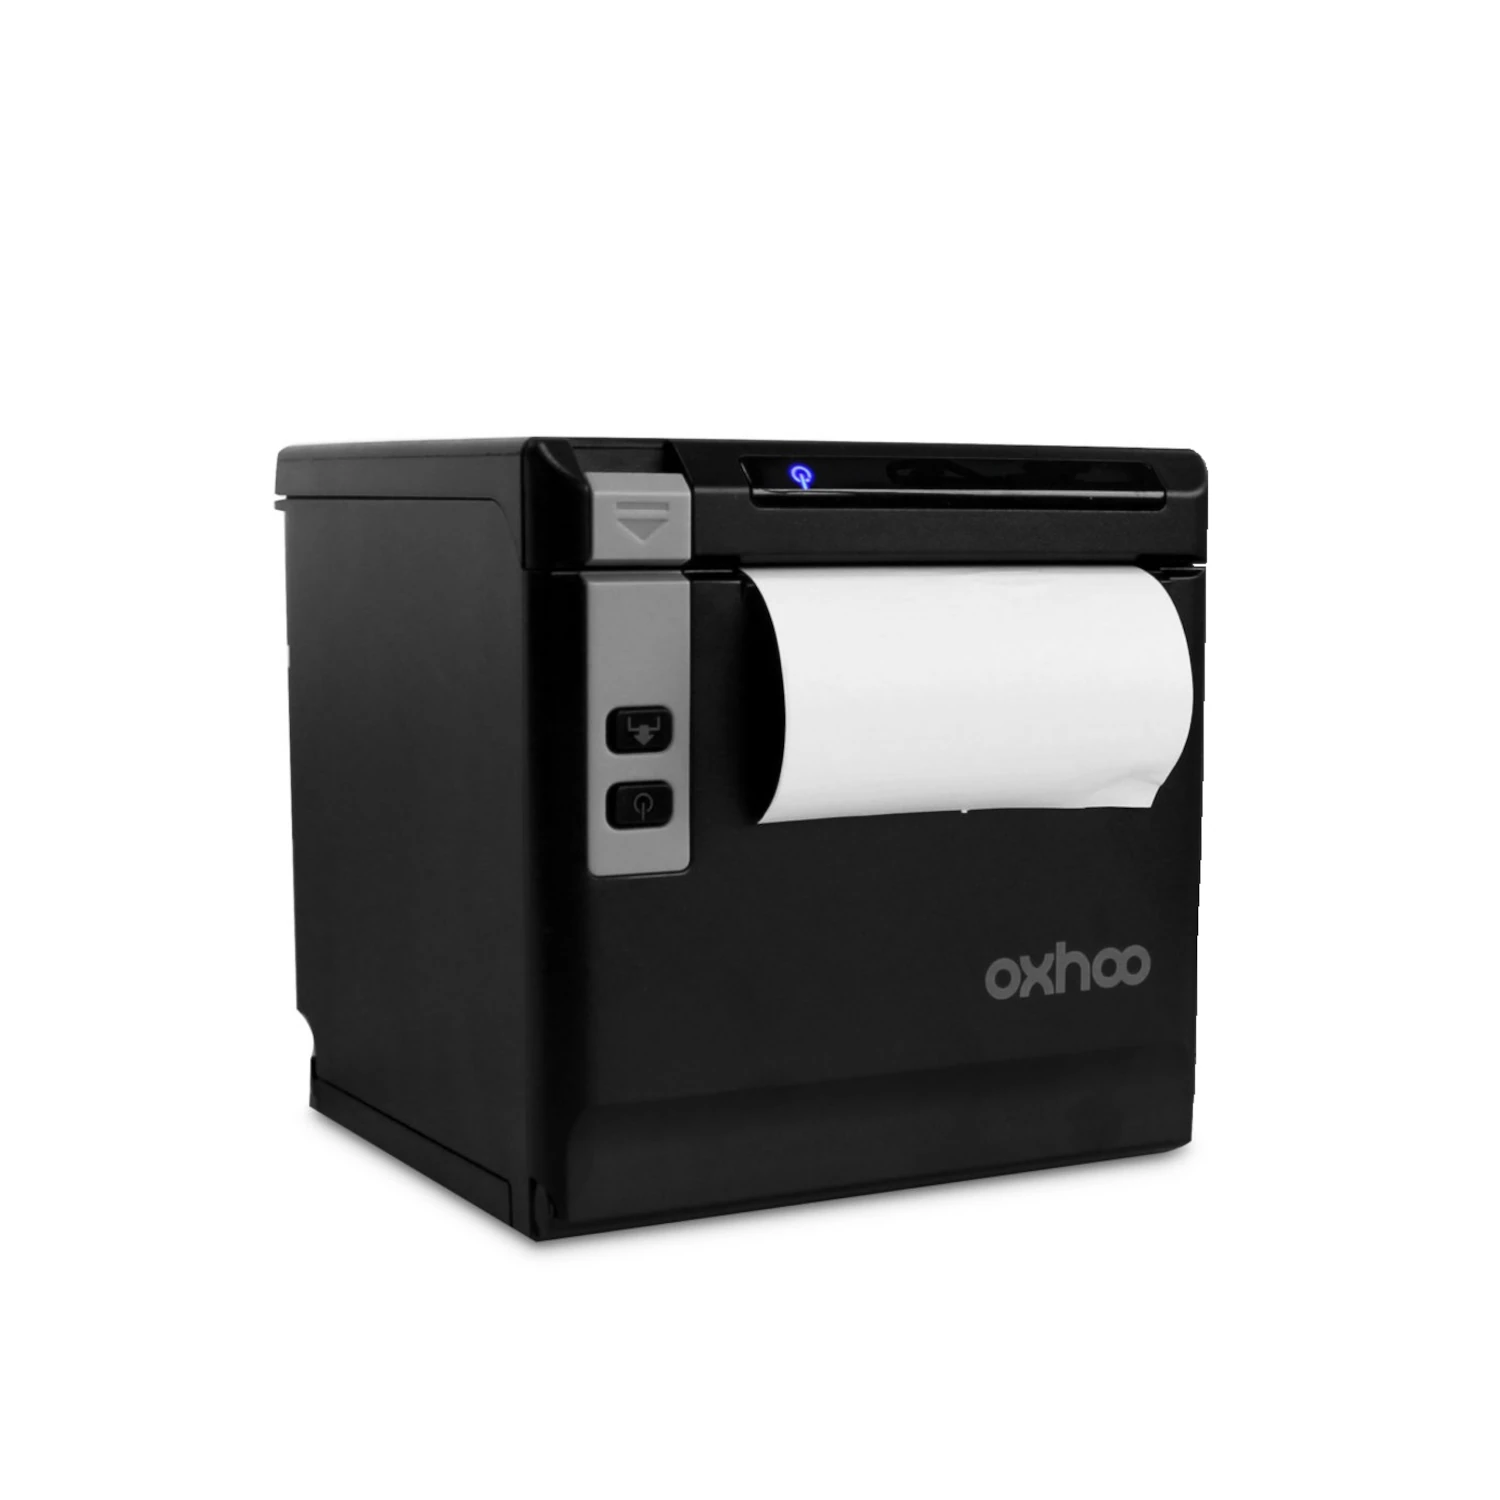 OXHOO TP85 Thermal Receipt Printer